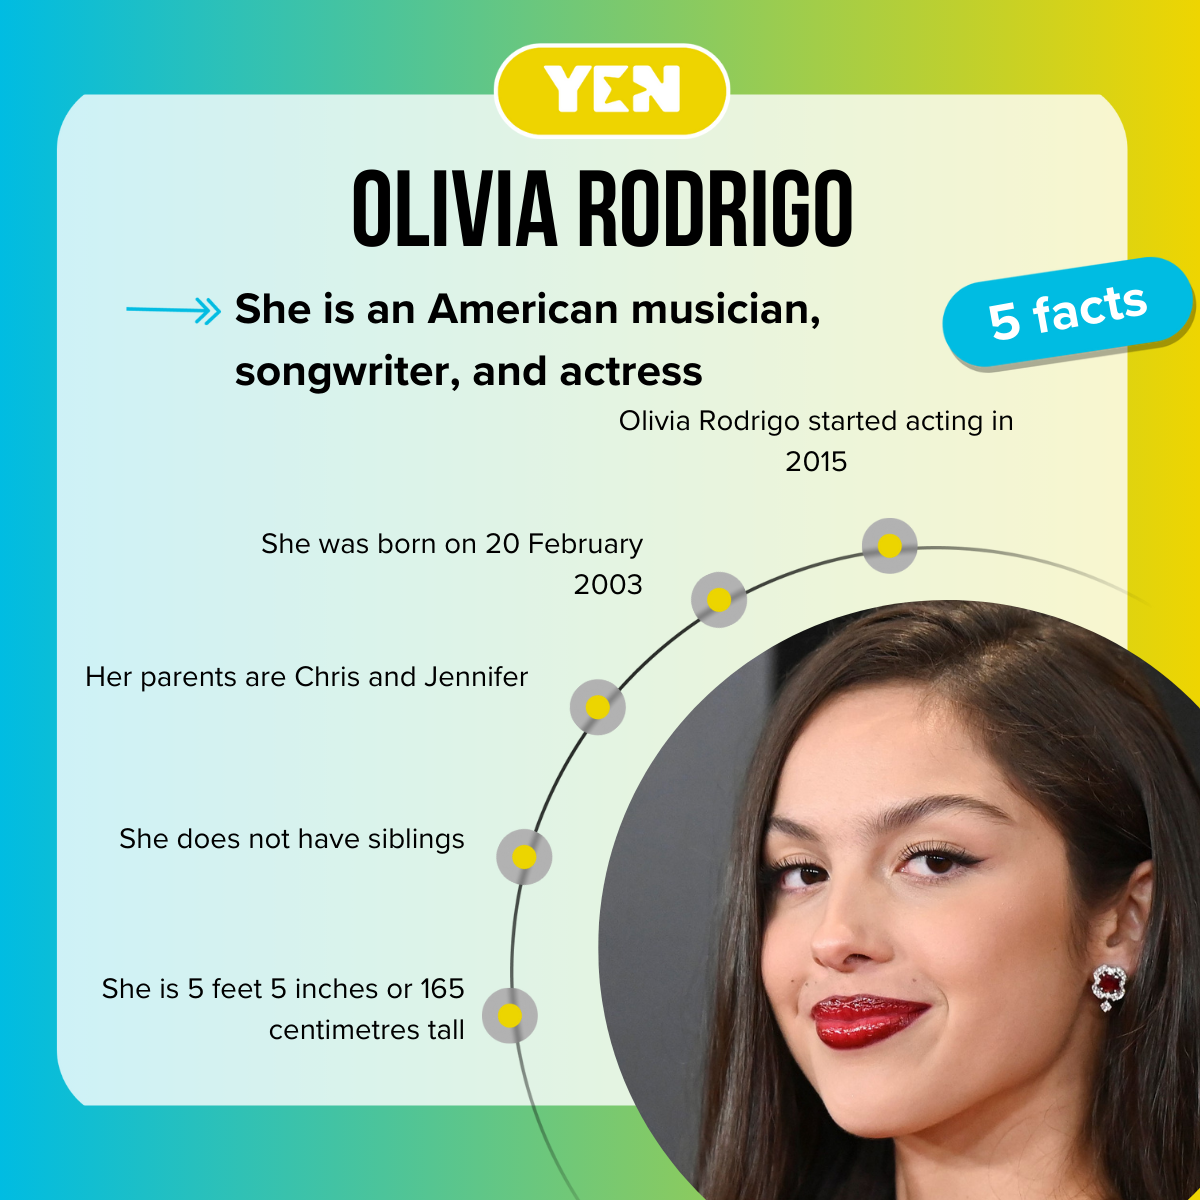 Facts about Olivia Rodrigo